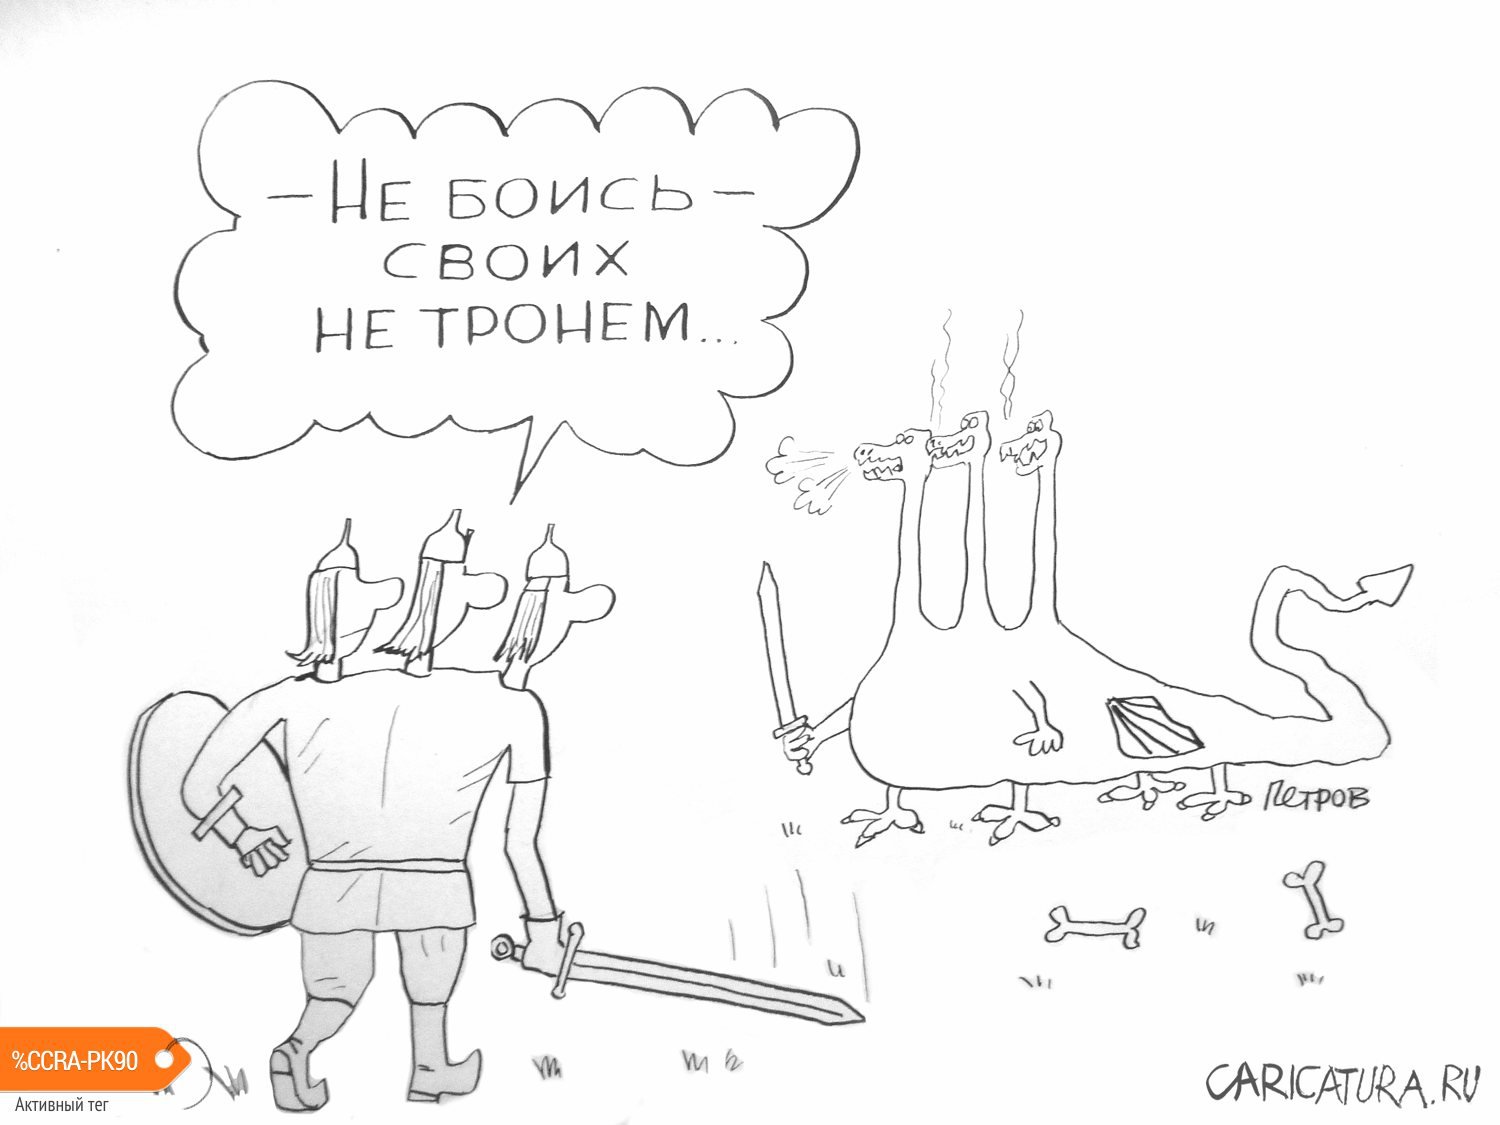 Карикатура "Своих не тронем", Александр Петров